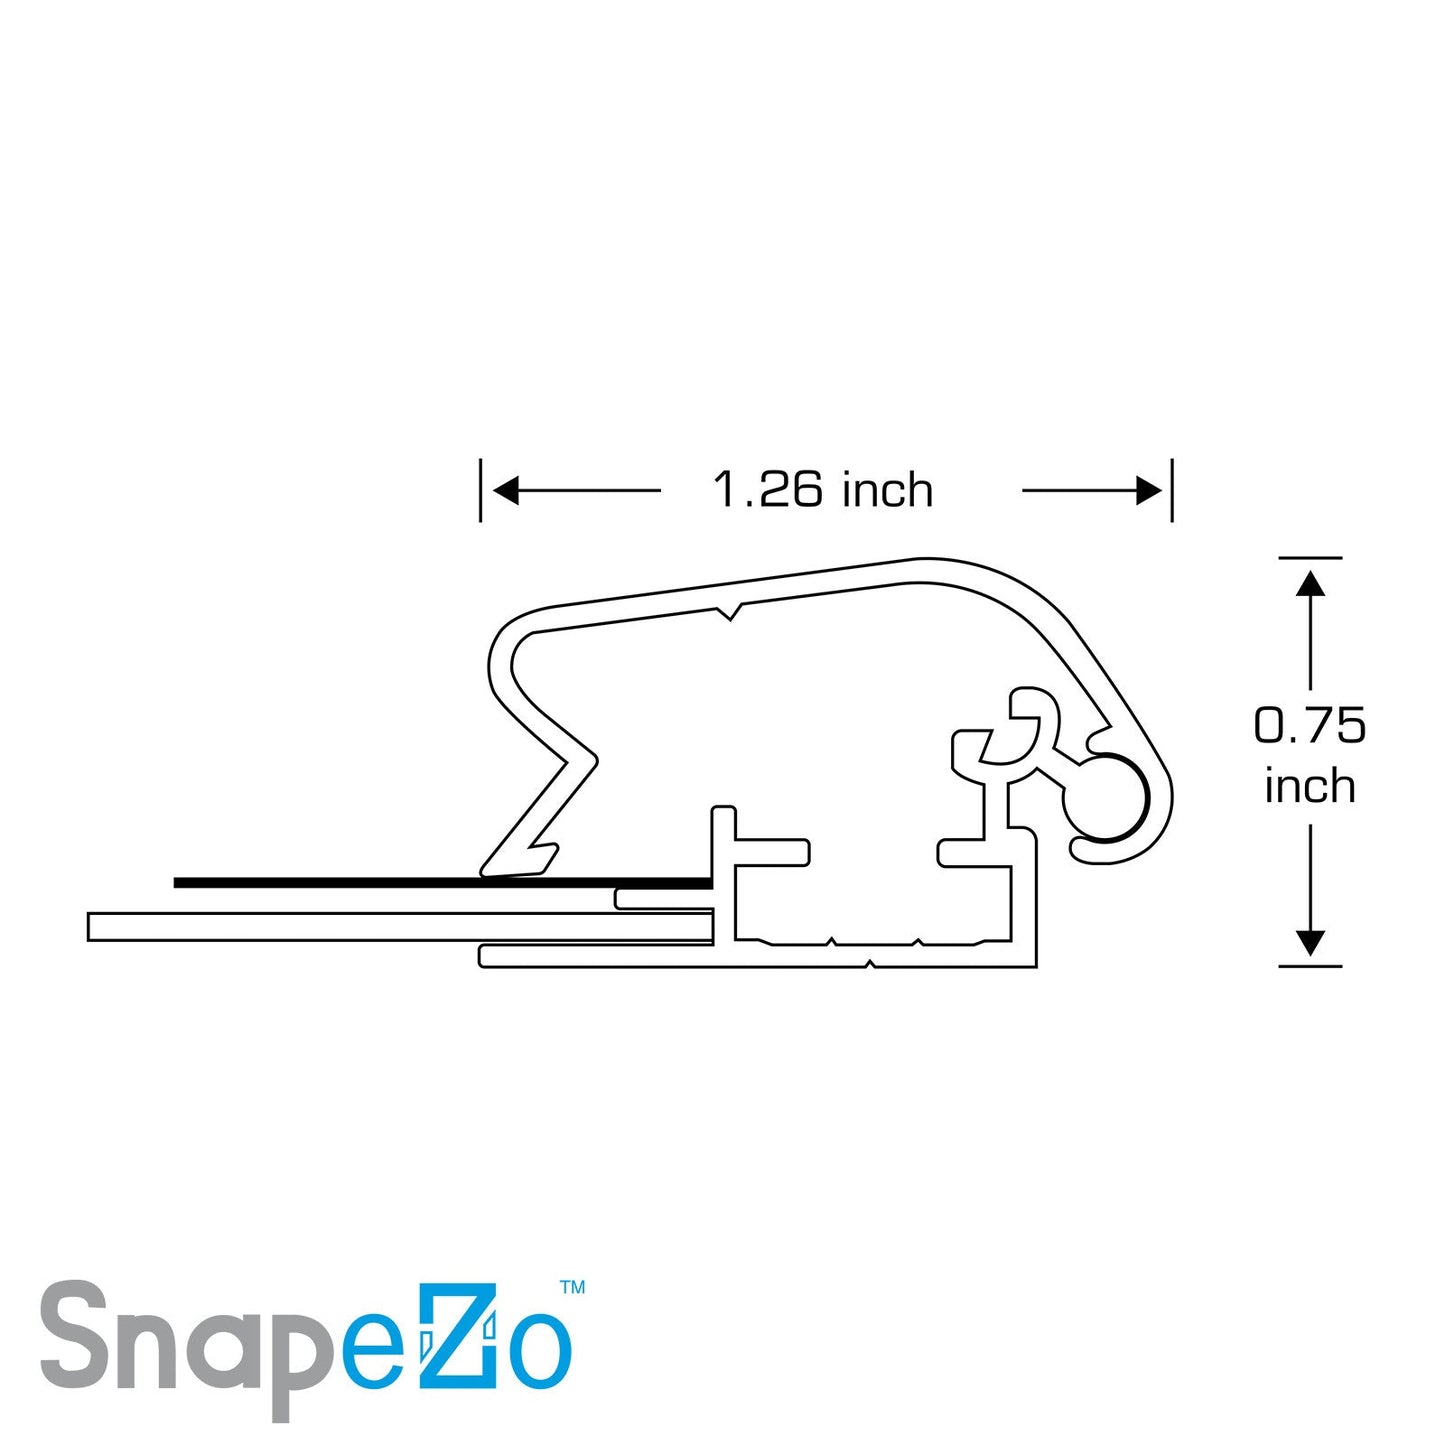 11x17 Black SnapeZo® Snap Frame - 1.25" Profile